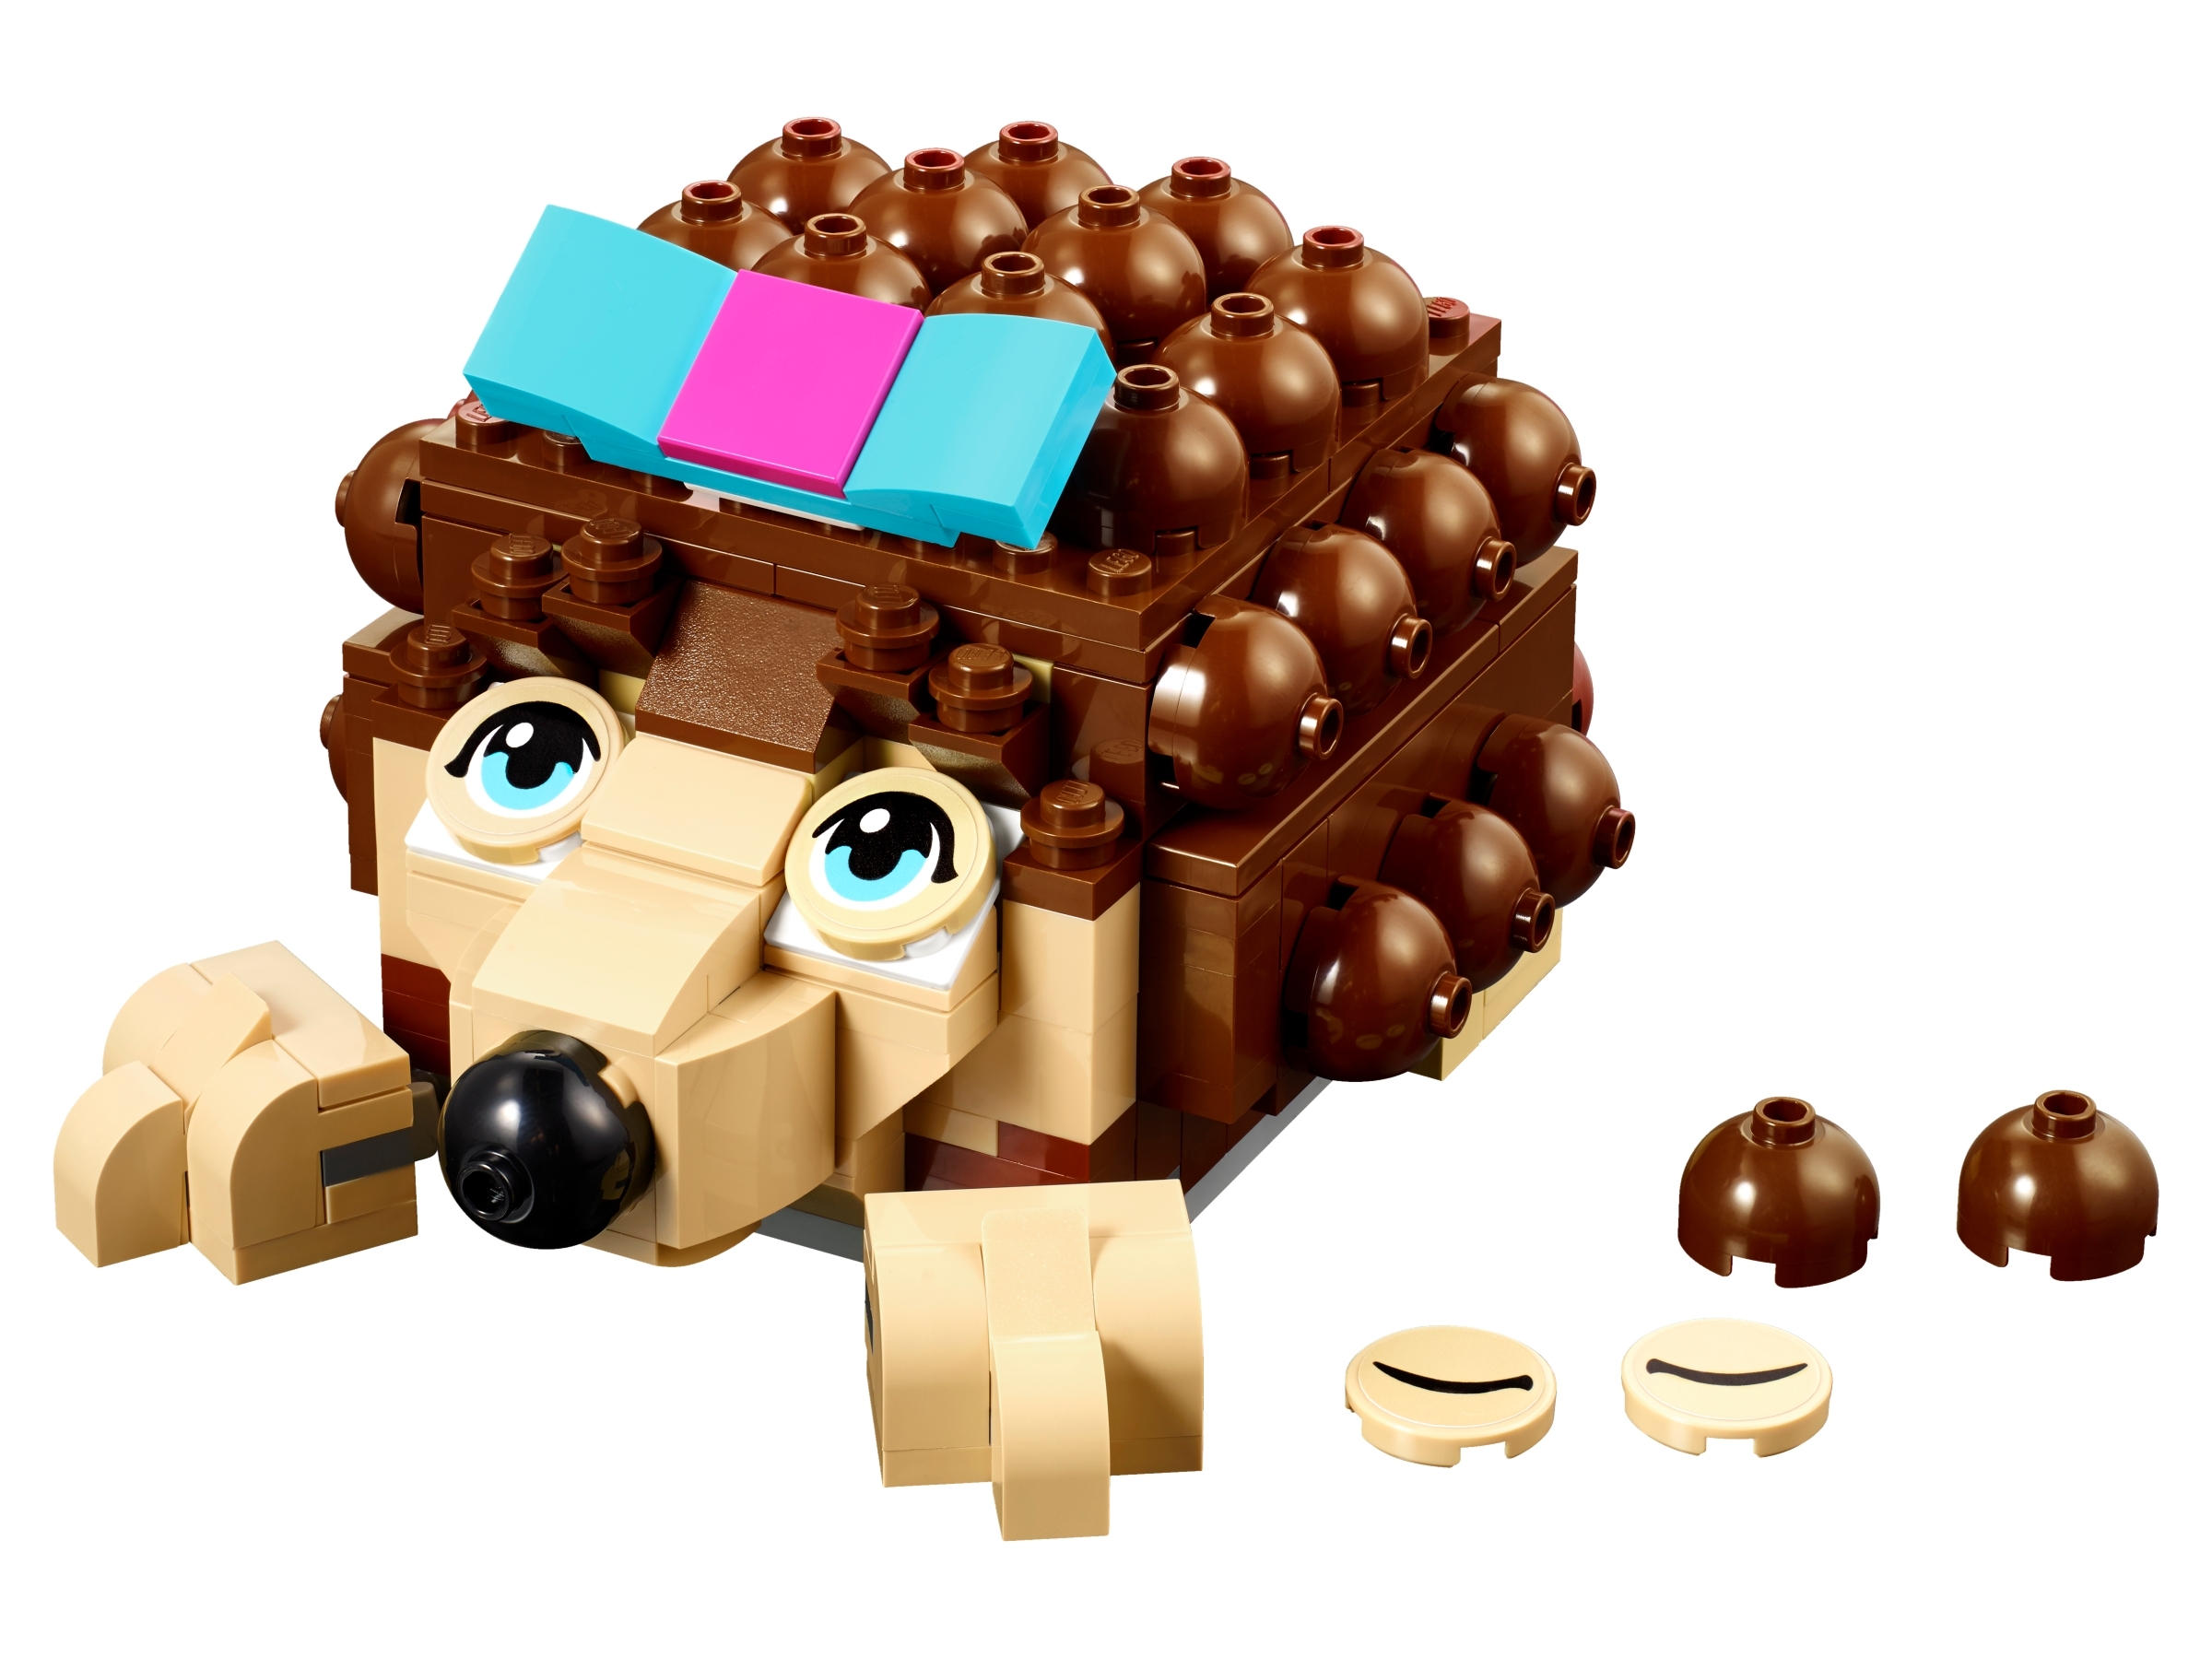 LEGO Friends Hedgehog Storage 40171